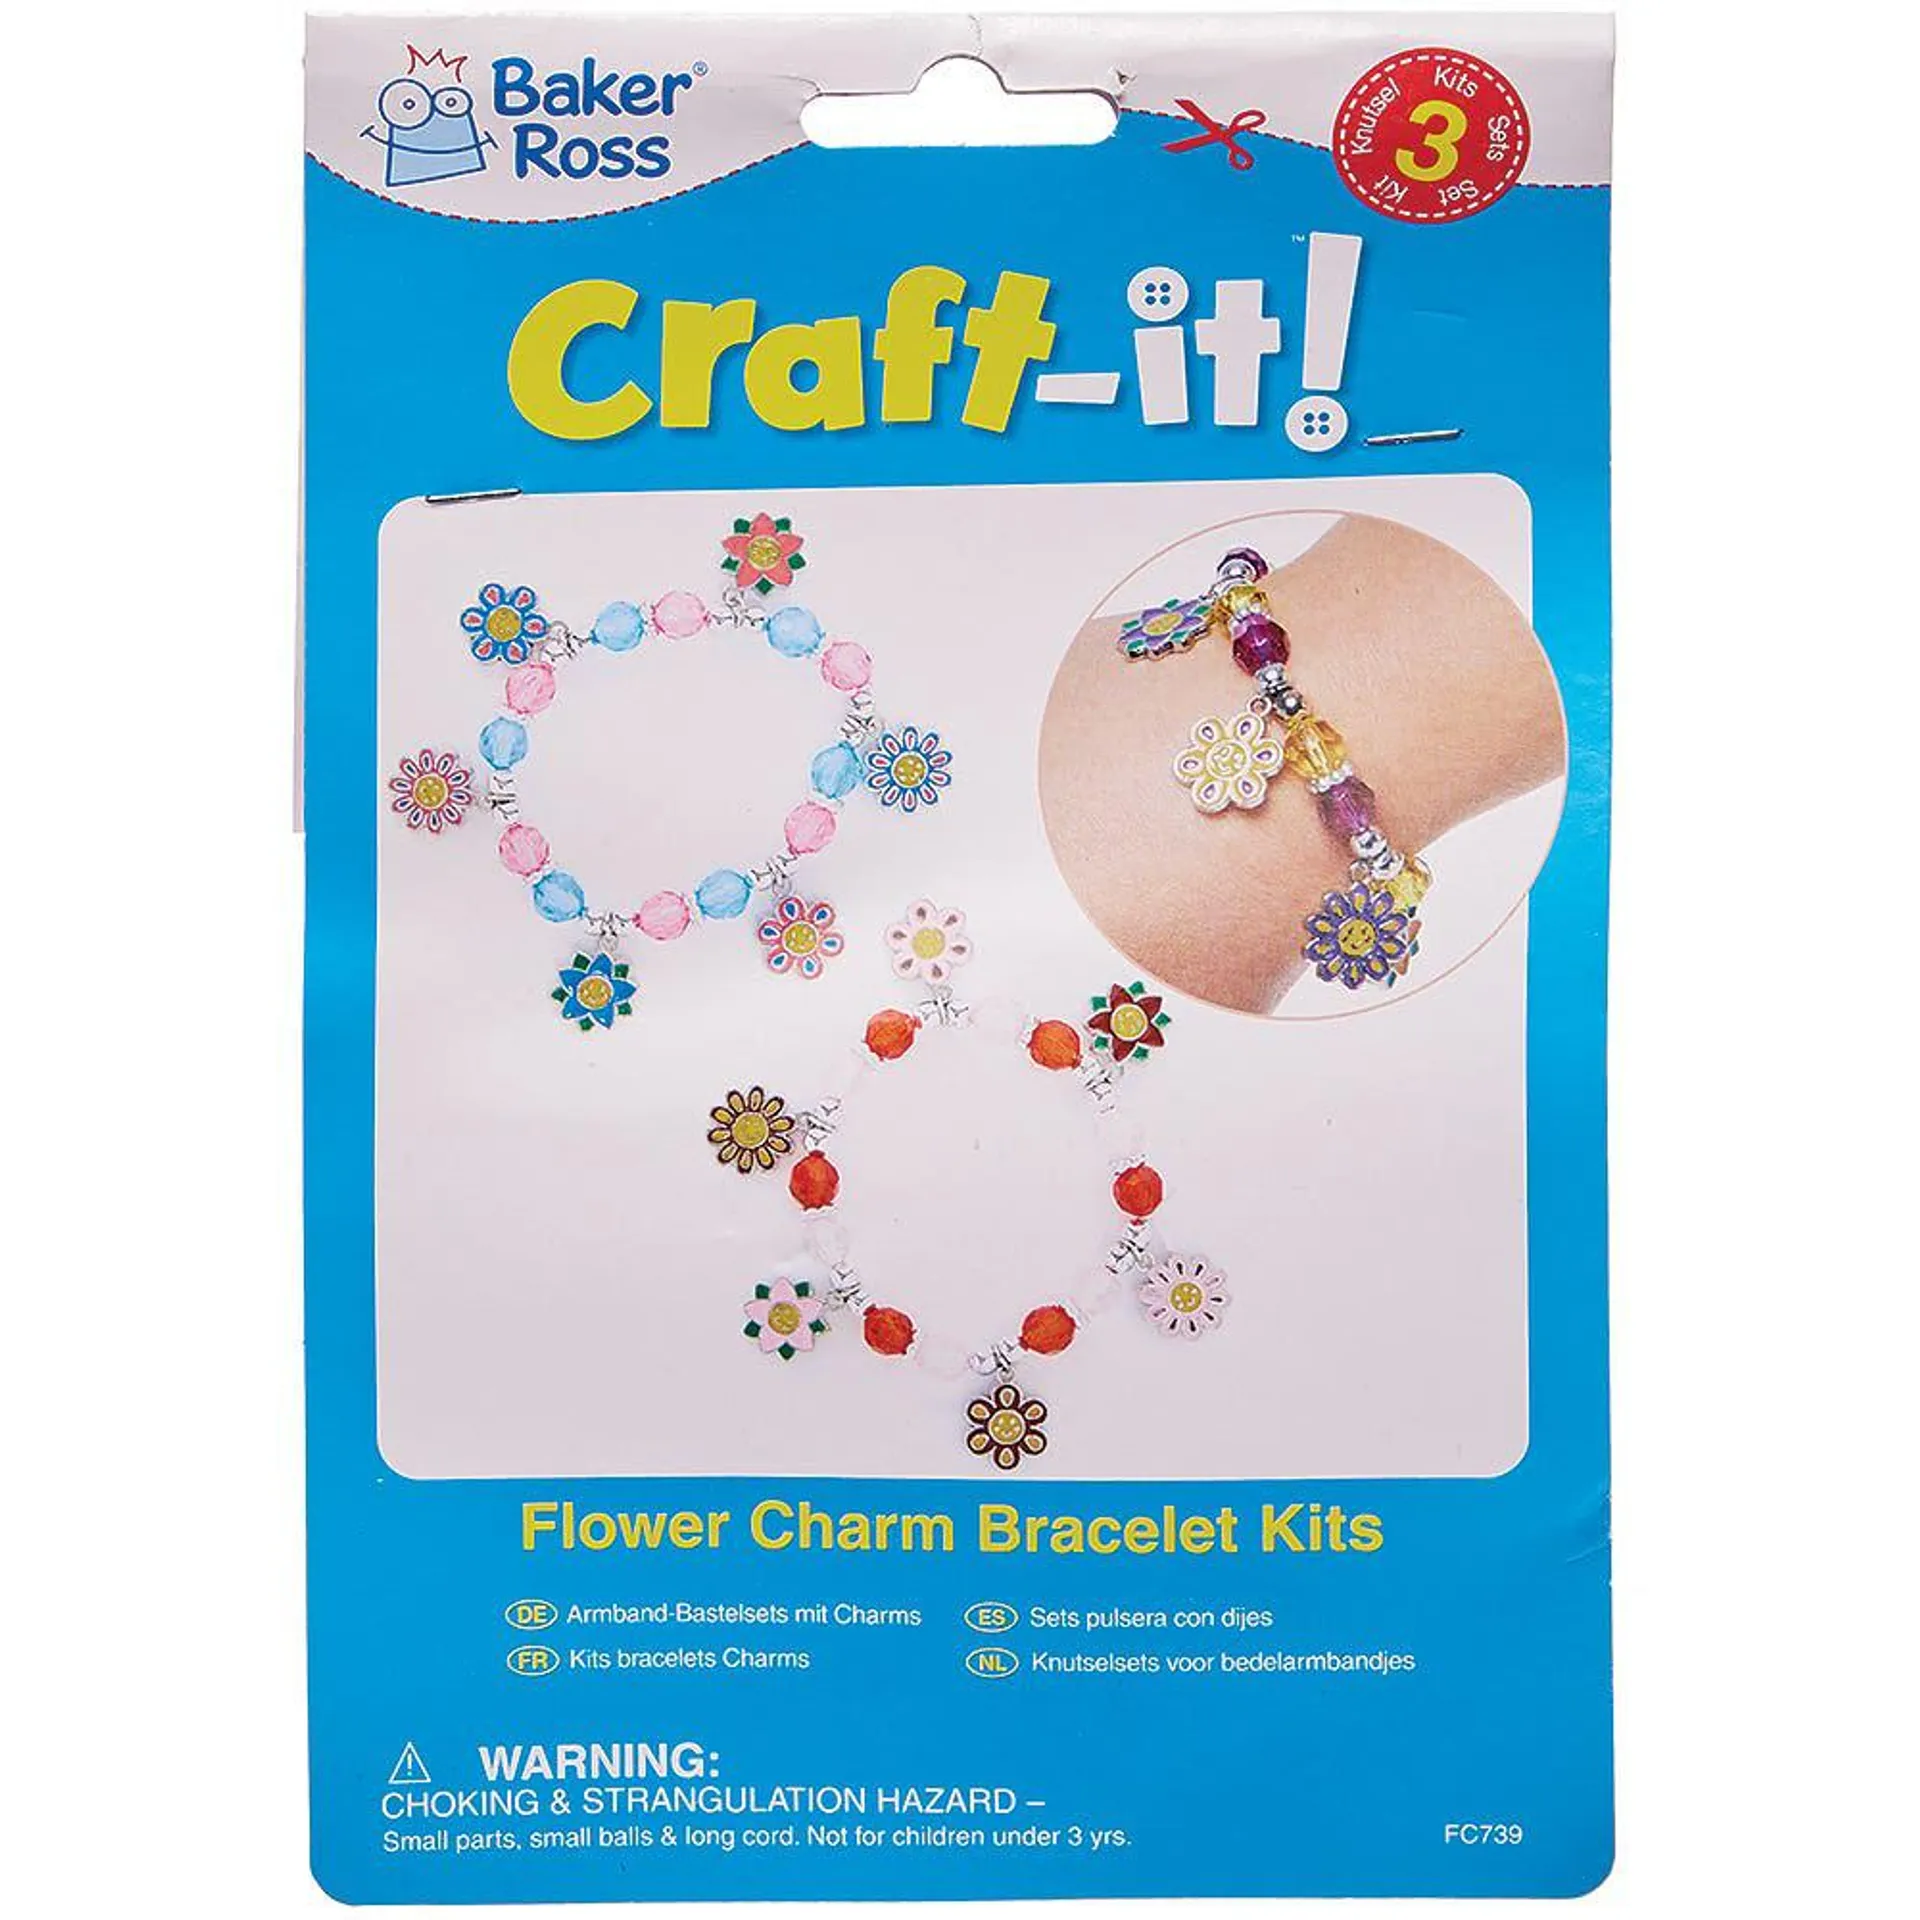 Flower Charm Bracelet Kits